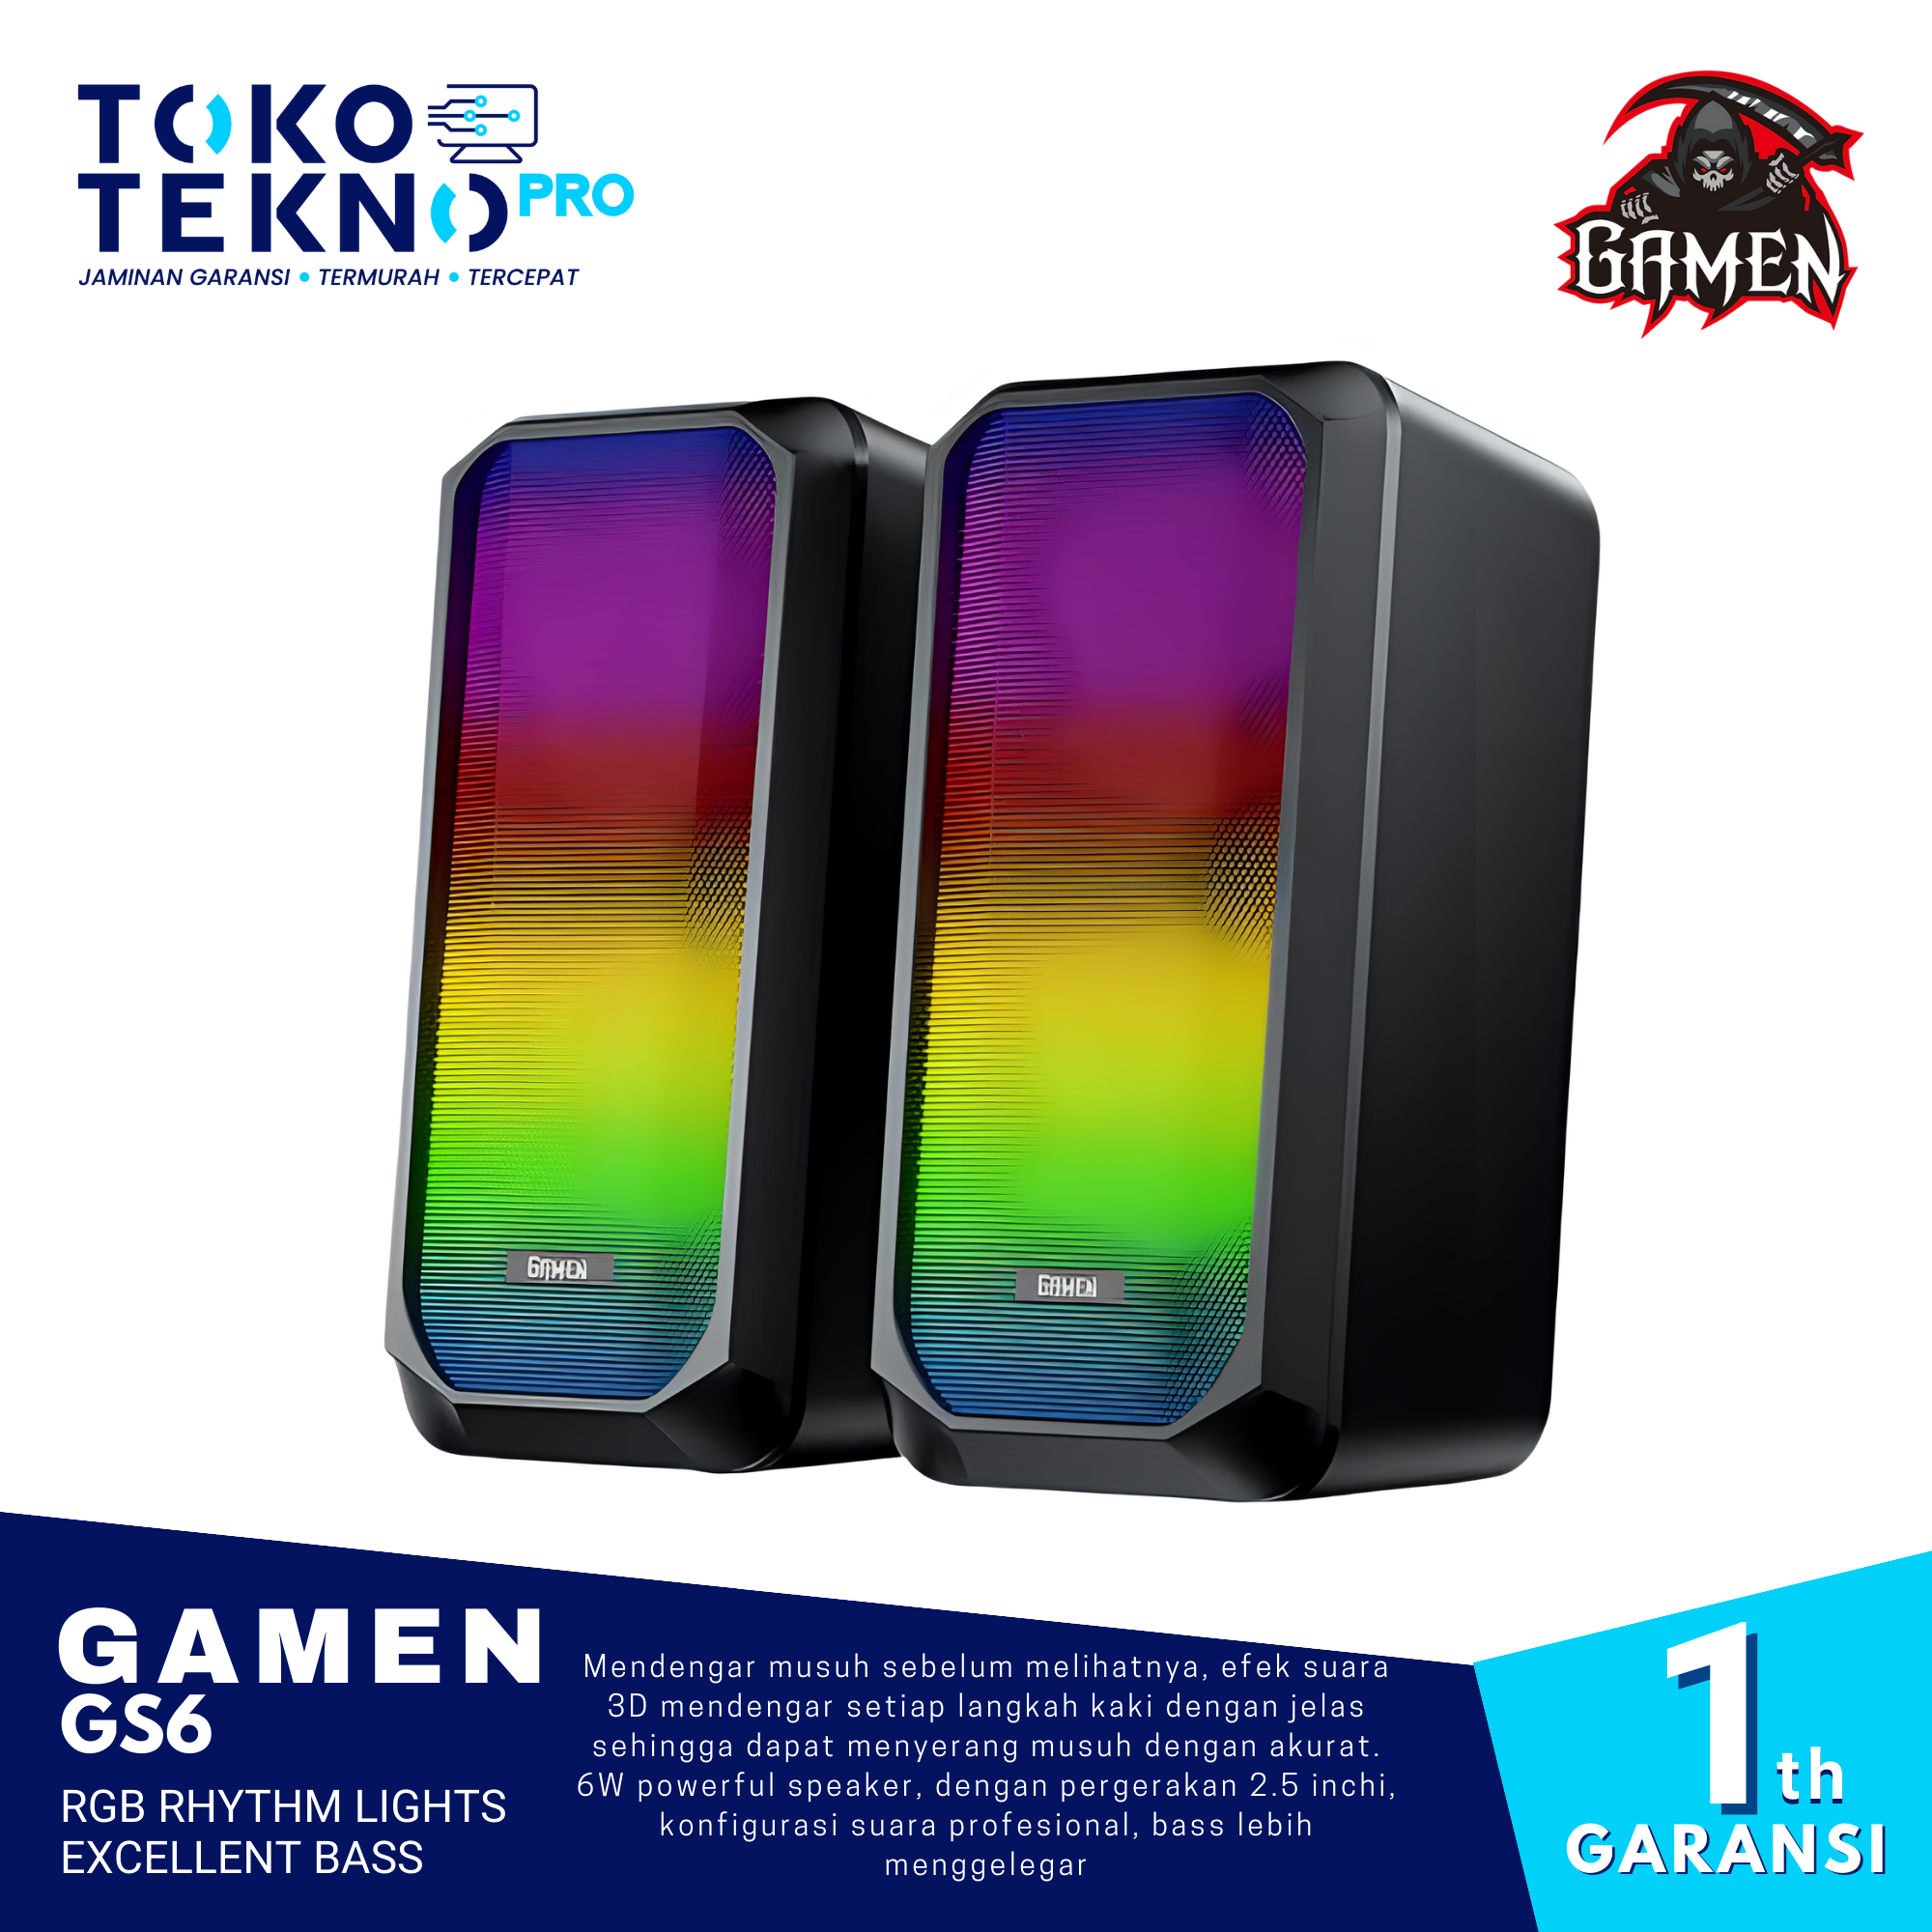 Gamen GS6 Gaming Speaker With RGB Rhythm Lights Excellent Bass